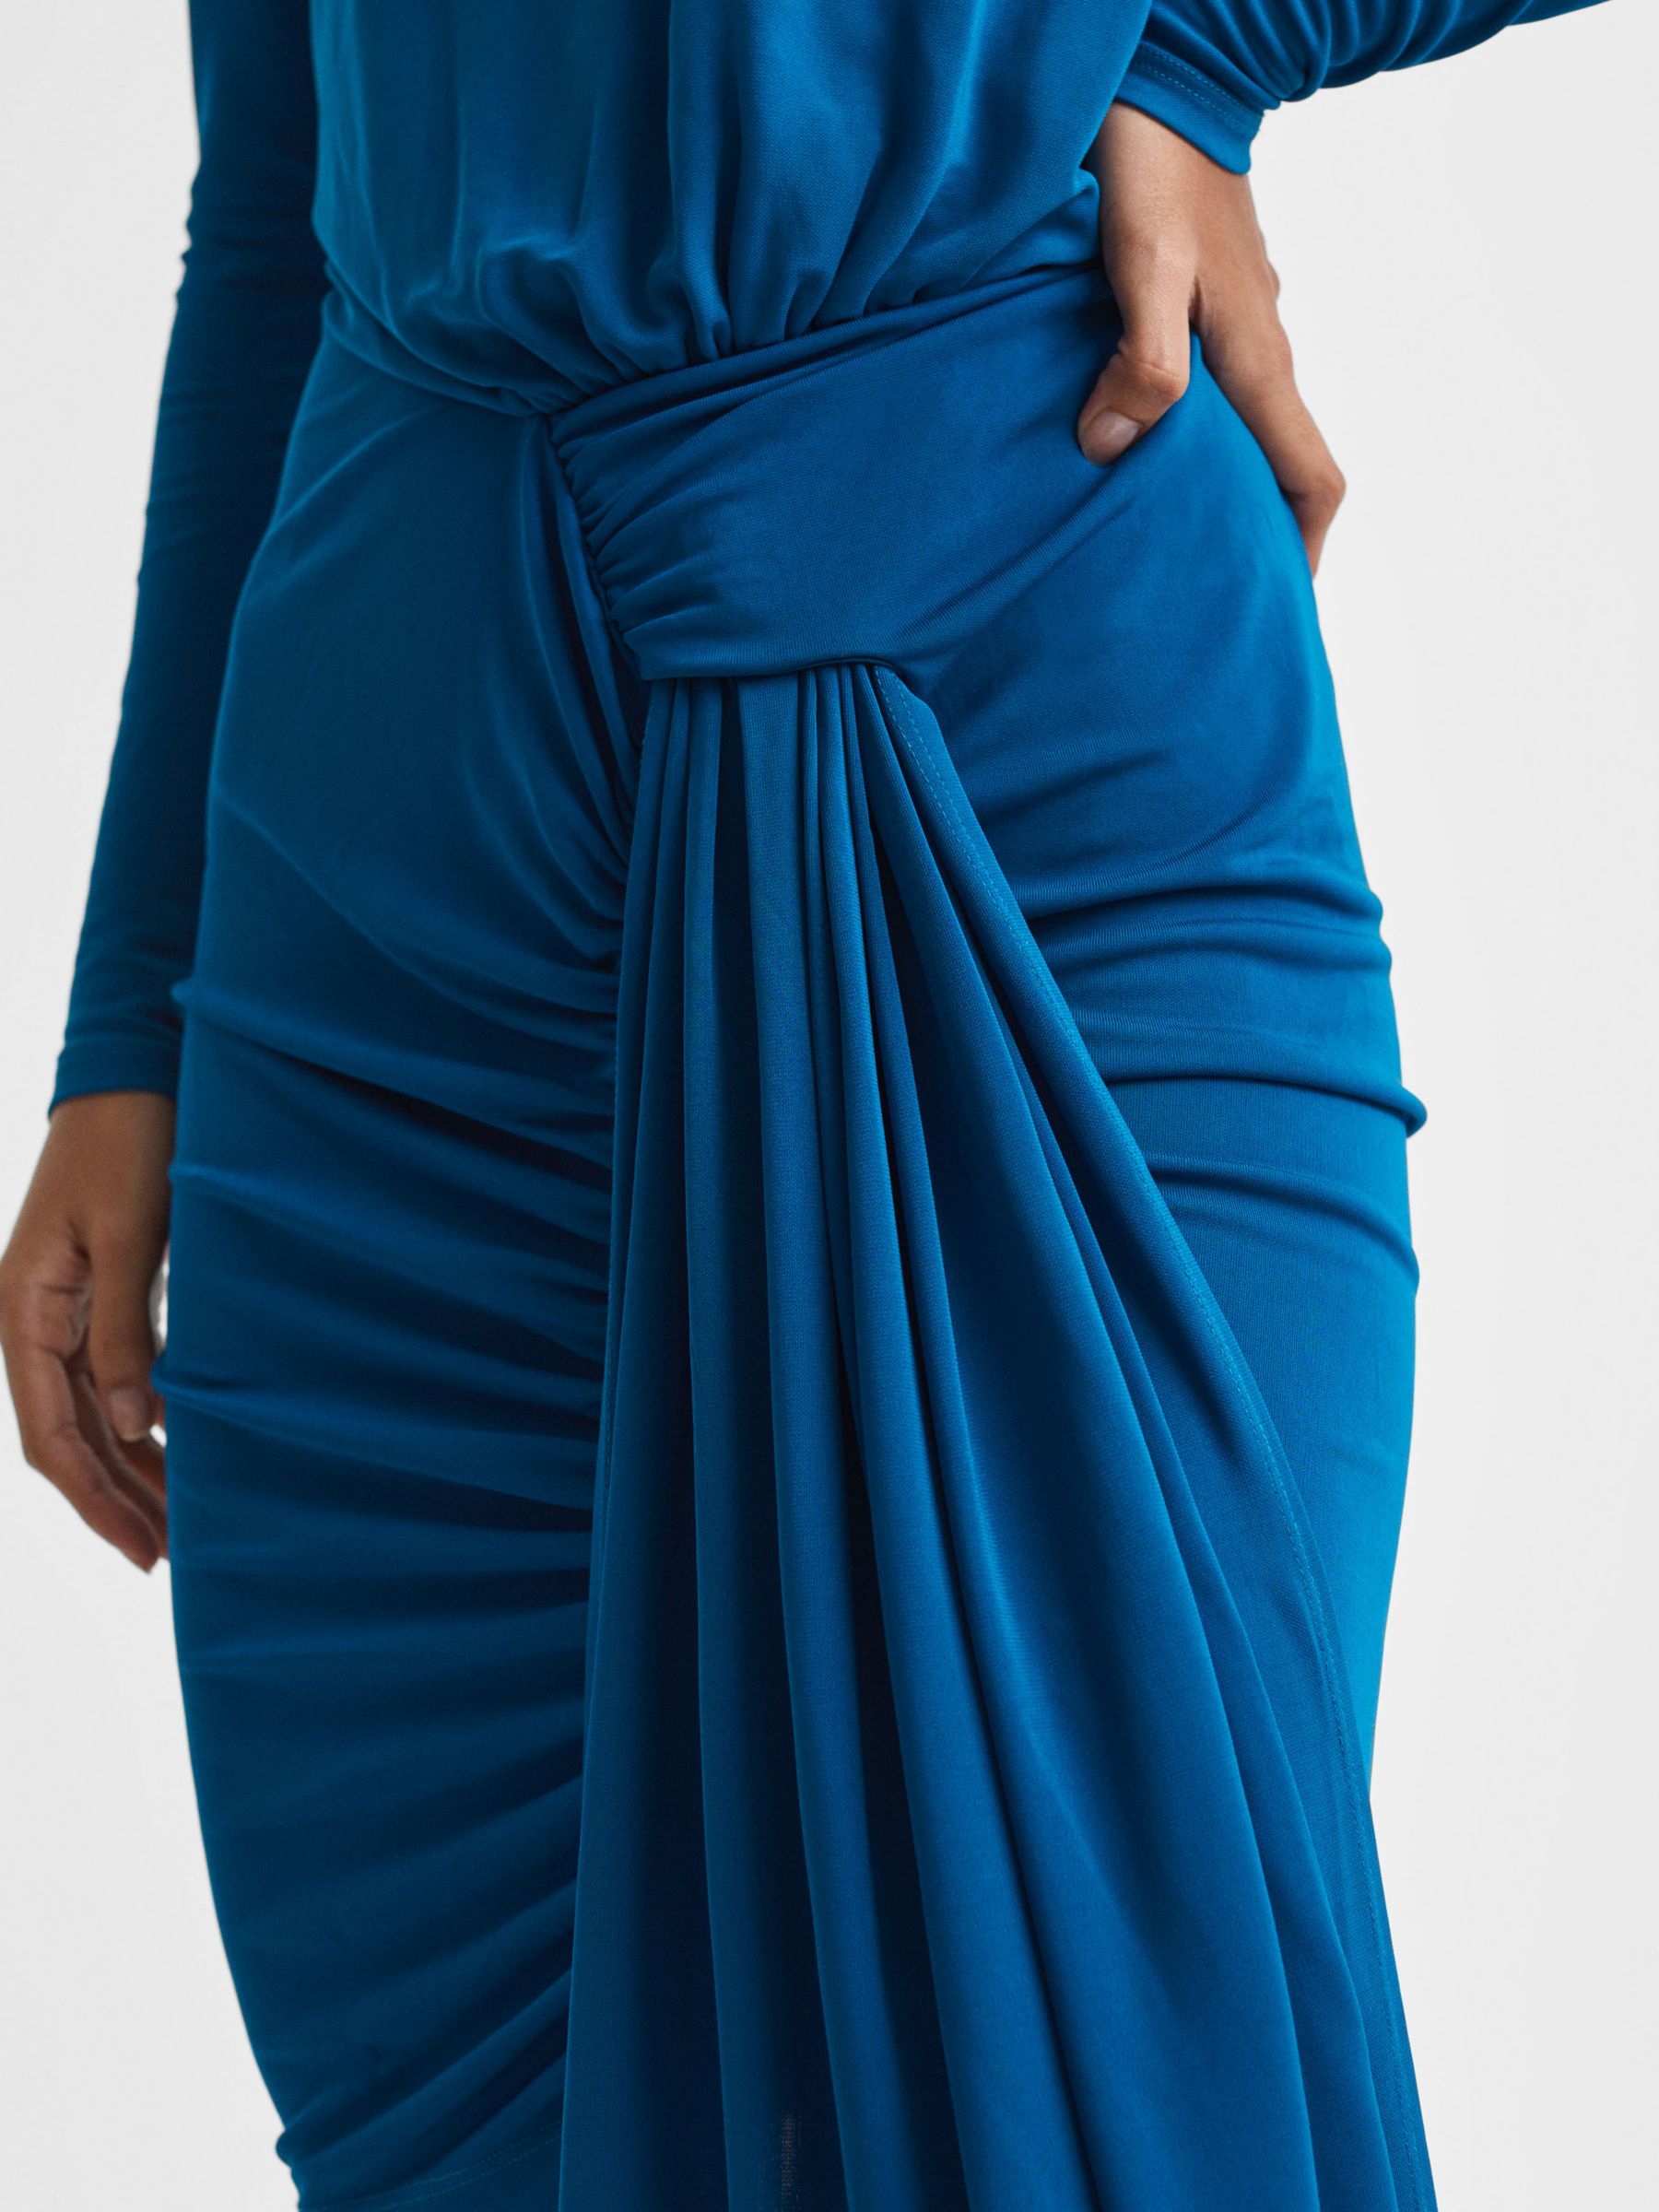 Reiss Isadora Midi Dress, Teal at John Lewis & Partners